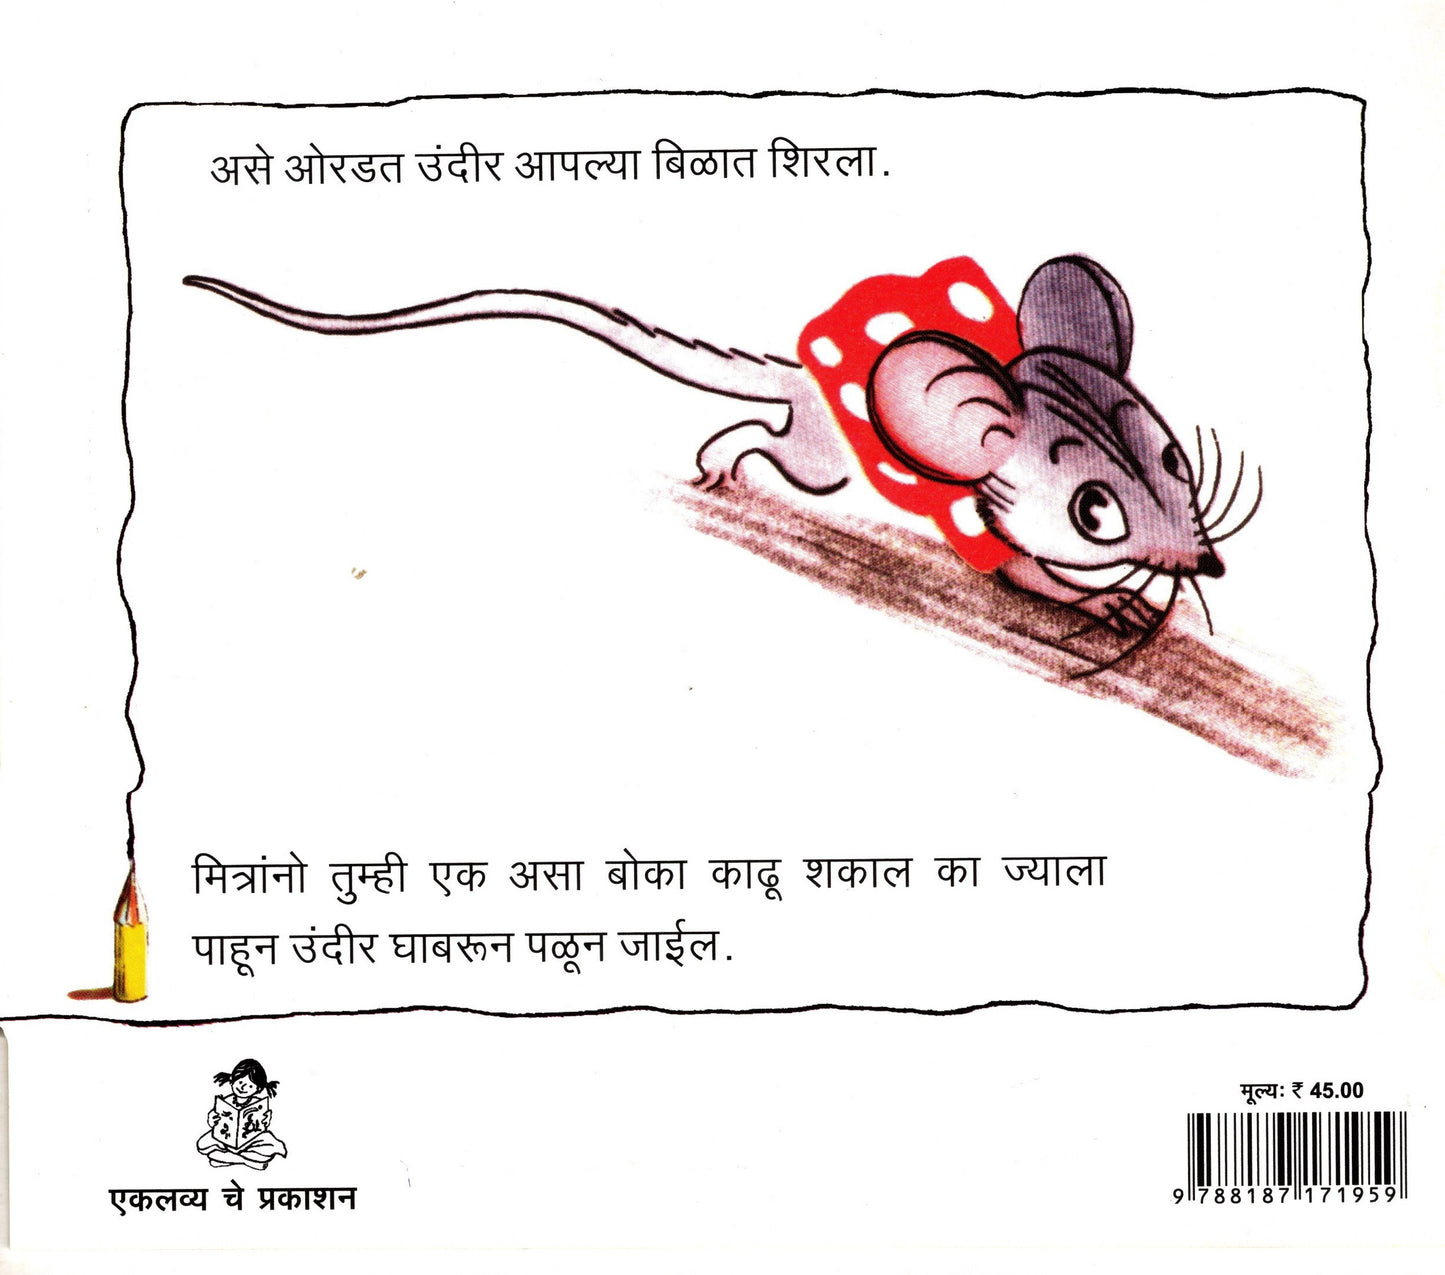 Chuhe ko Mili Pencil (Marathi)